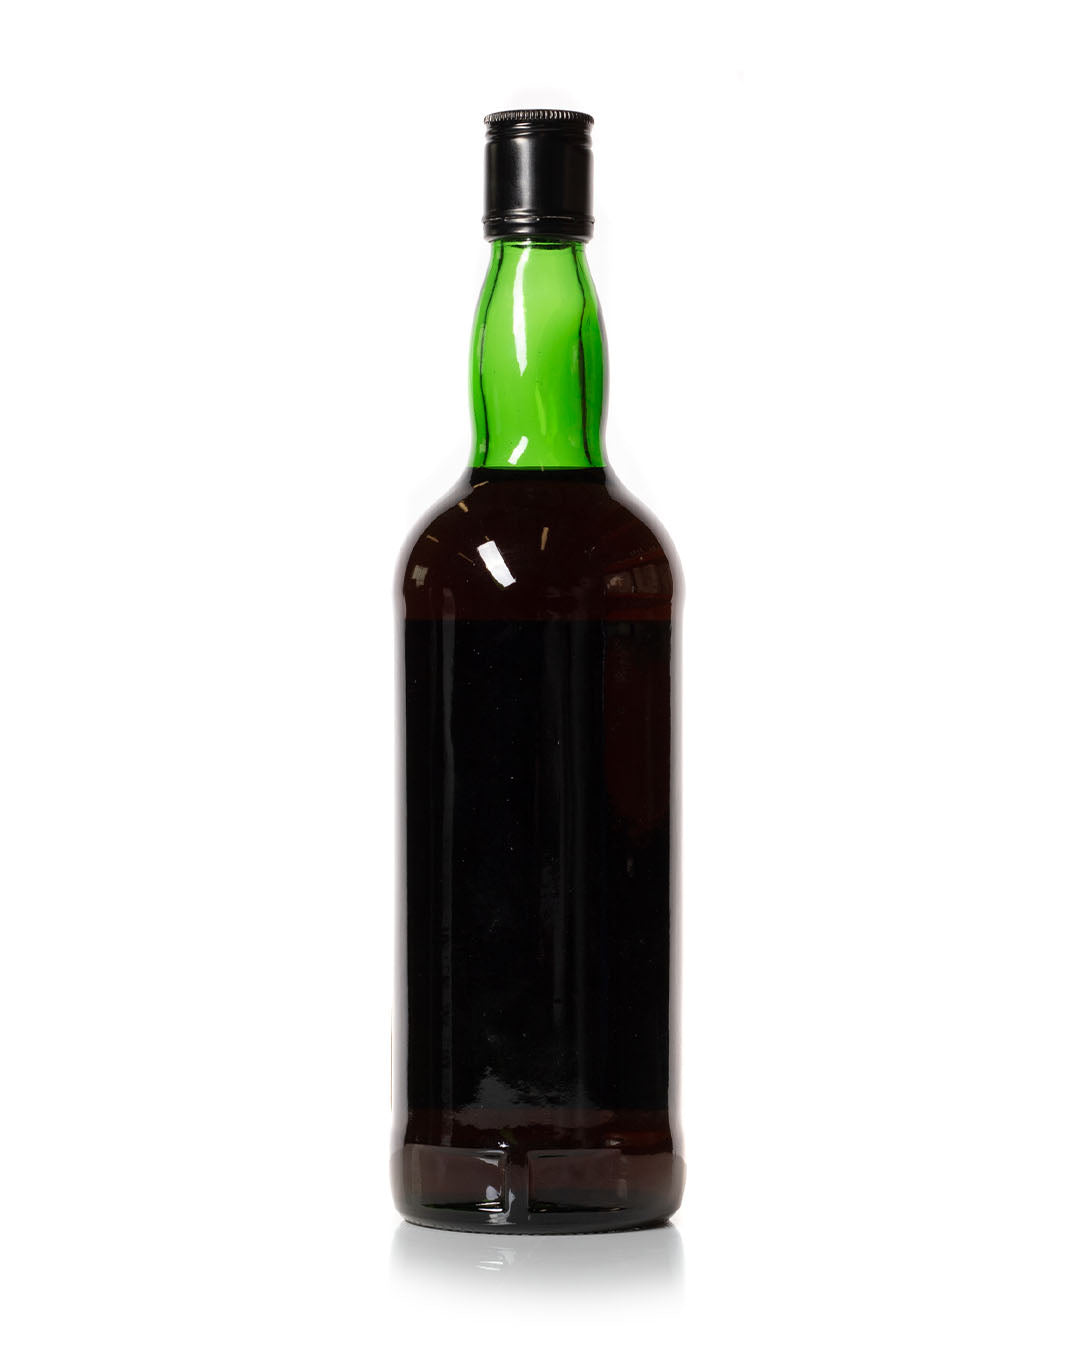 Dallas Dhu 1975 12 Year Old Scotch Malt Whisky Society SMWS 45.1 Bottled 1987